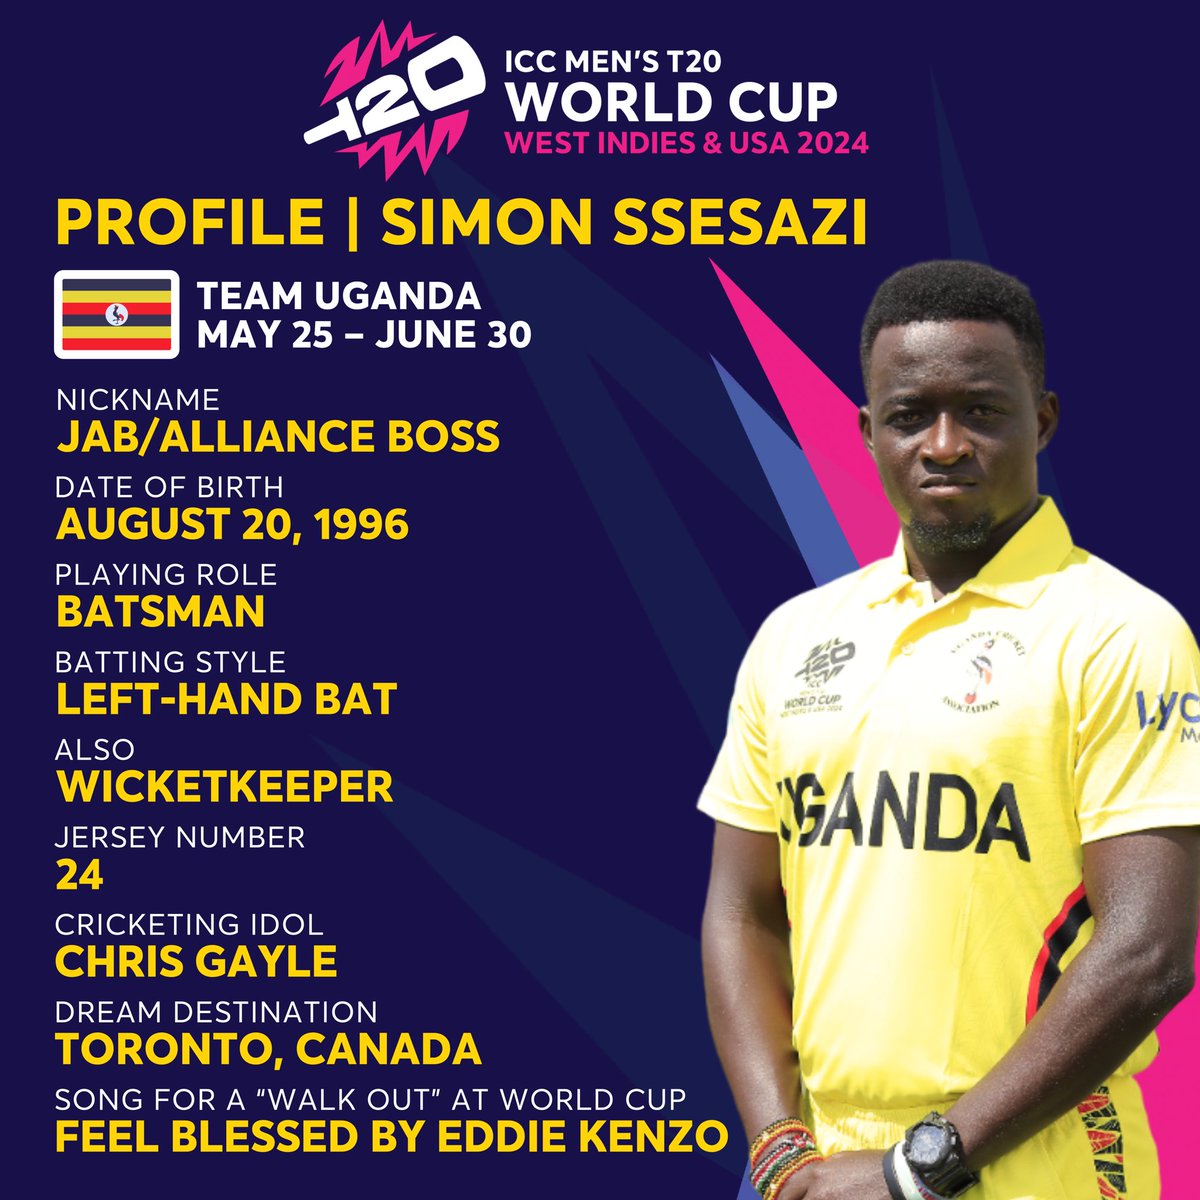 KNOW THE CRICKET CRANES #T20WorldCup SQUAD 

Simon Ssesazi, aka 'Alliance Boss', tops Uganda's T20I run charts with 2072 runs including a rapid century! 

Dive into his profile👇🏽👇🏽

#WeAreCricketCranes